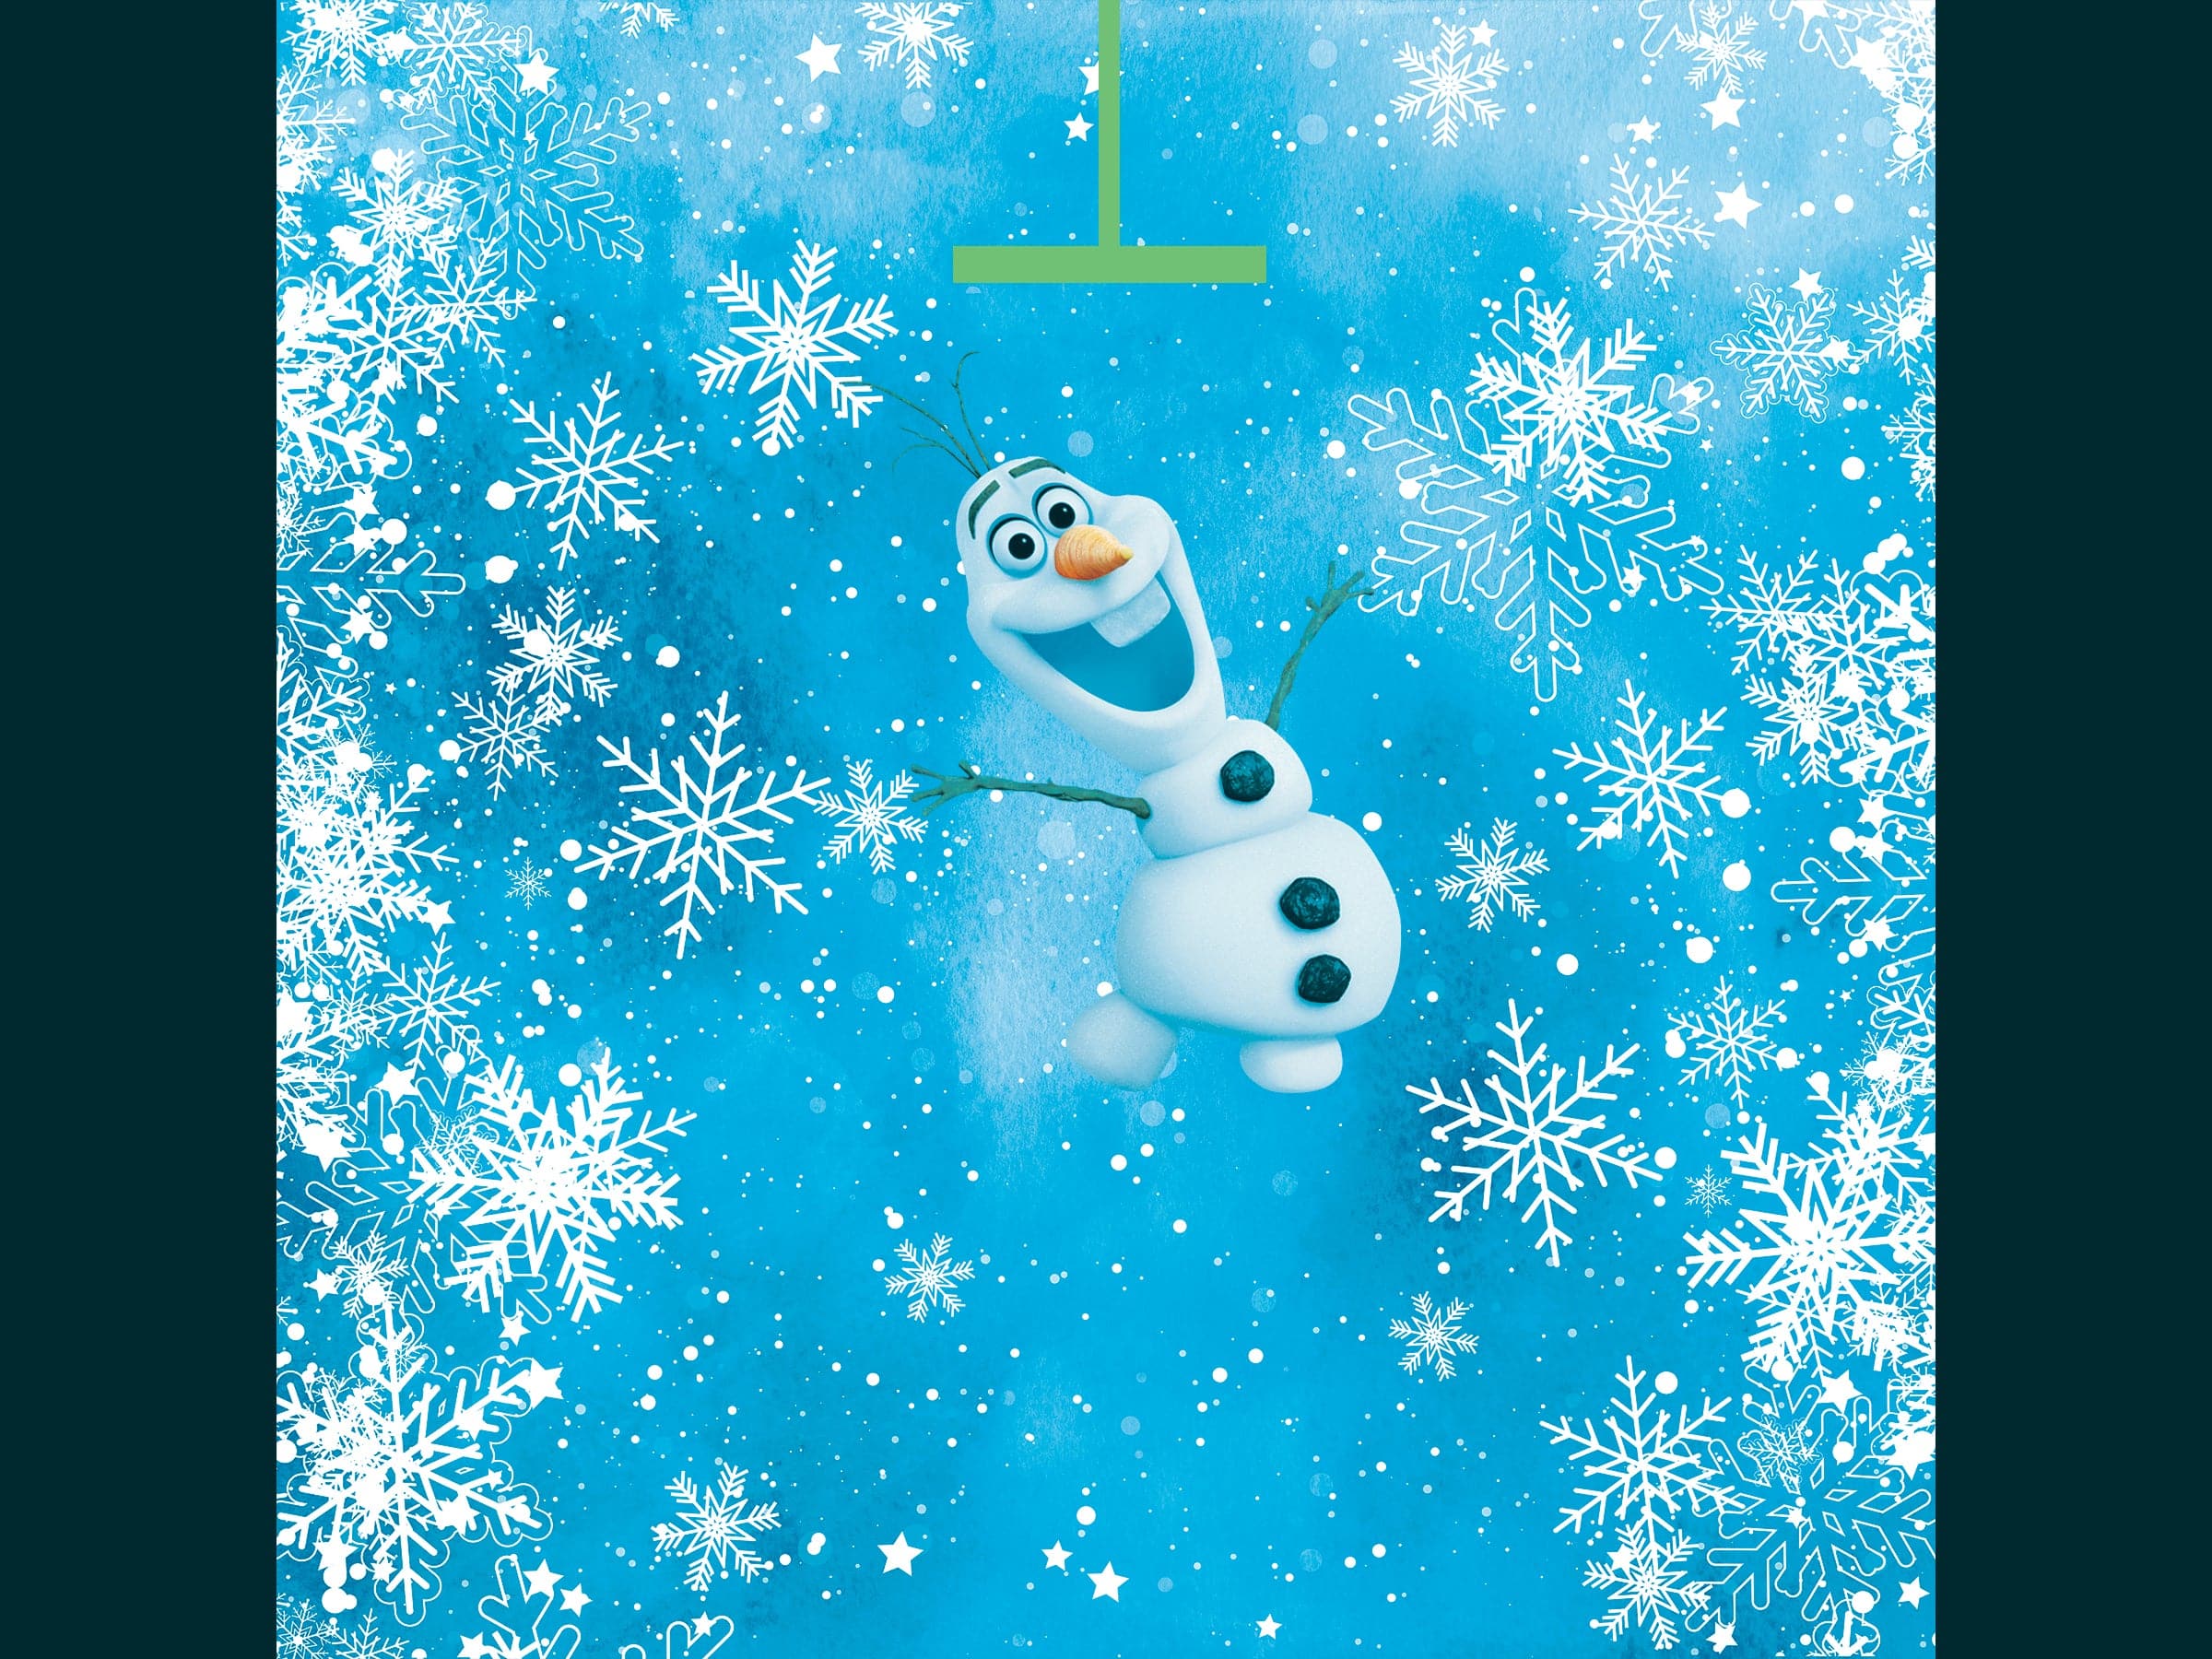 Olaf's Frozen Adventure Xbox Series X Controller: Cool Xbox Series X Controller